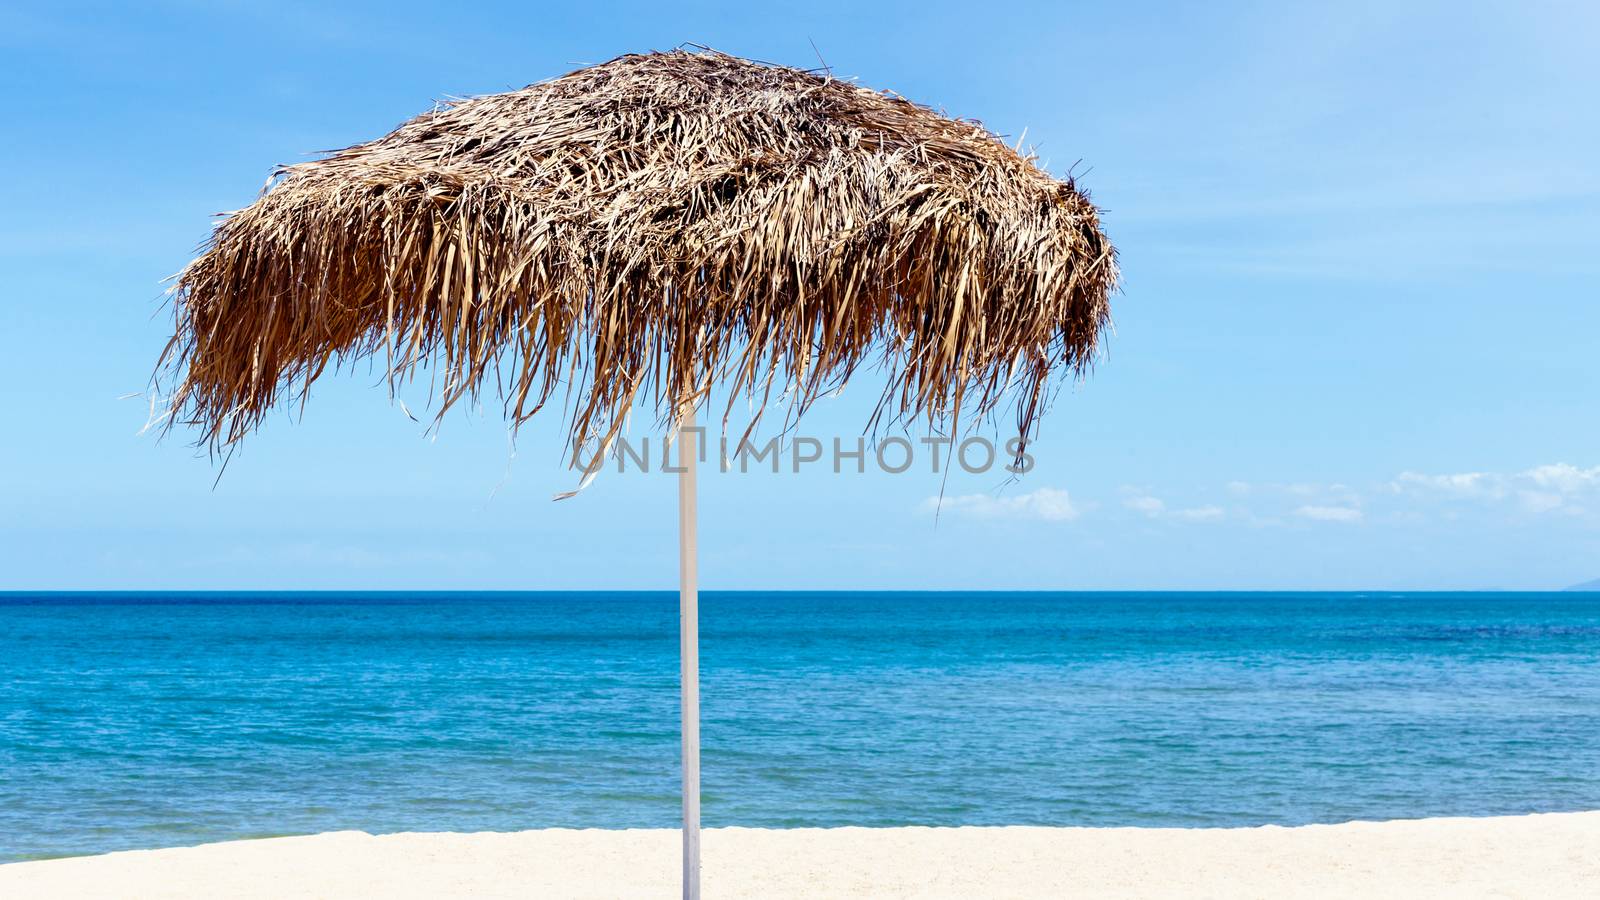 The beautiful straw umbrella at the beach. - at Koh Samui Thaila by kerdkanno